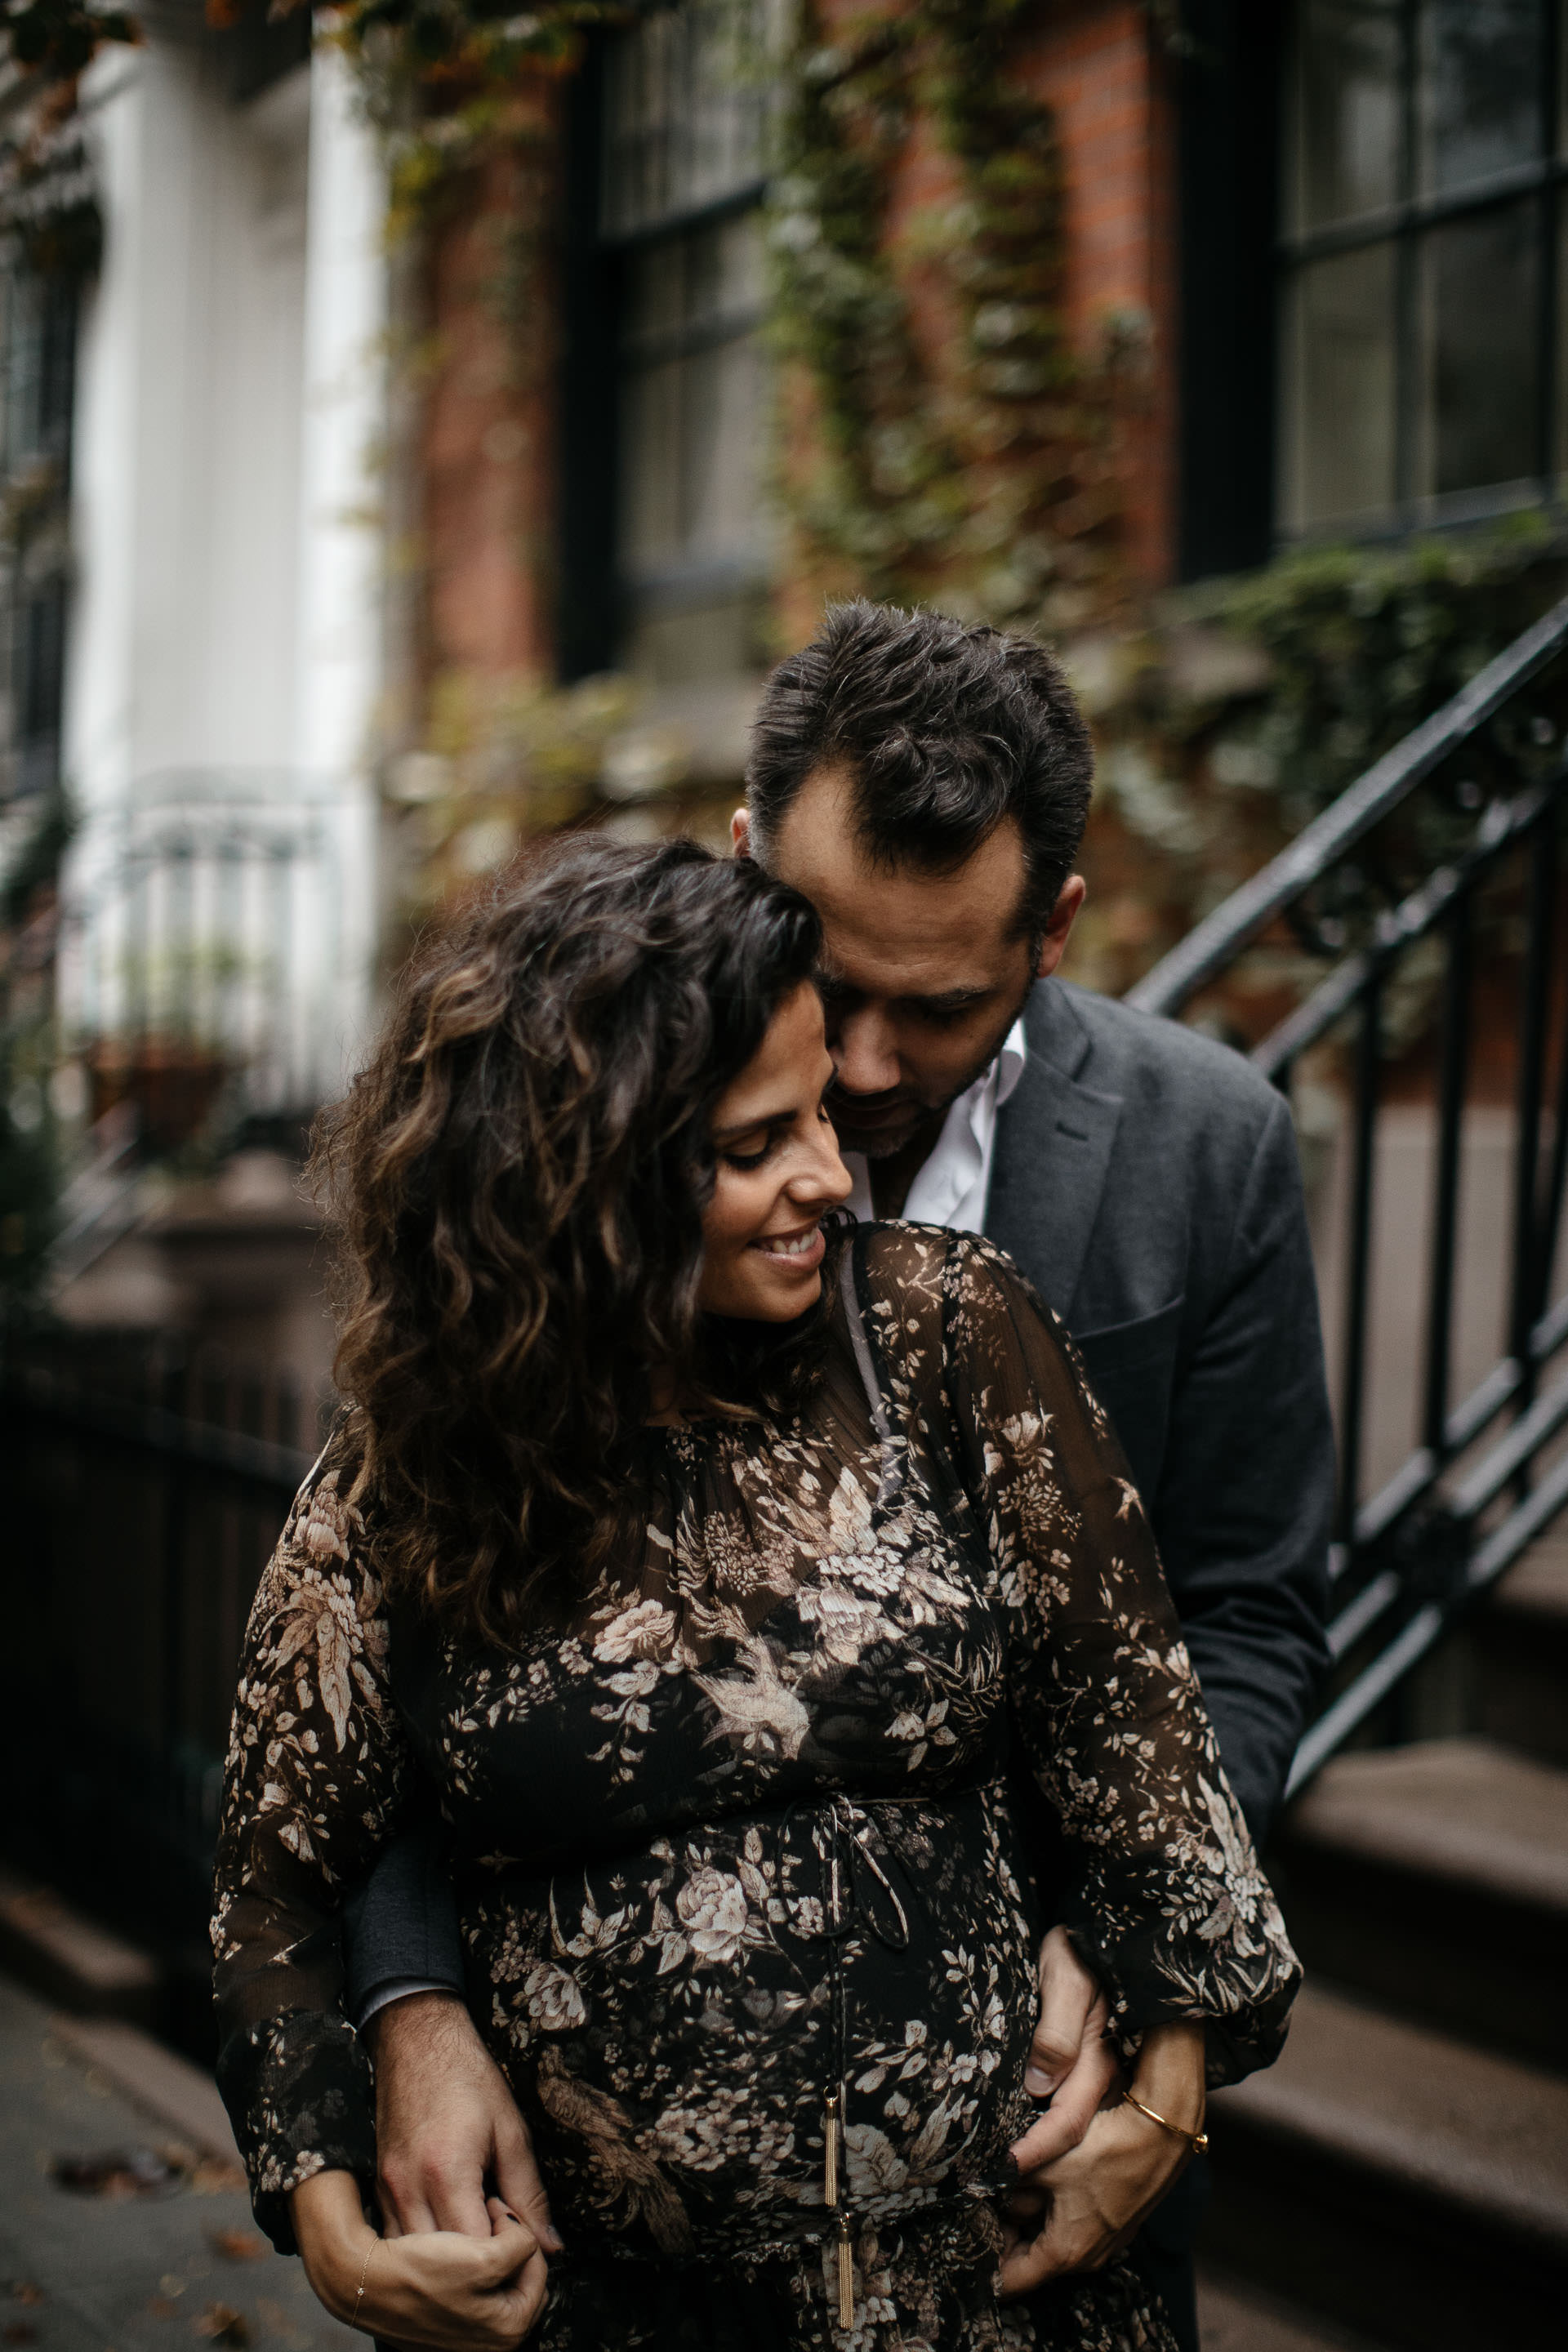 Rime Arodaki & Greg Finck Fall Engagement in West Village, New York City by Jean-Laurent Gaudy